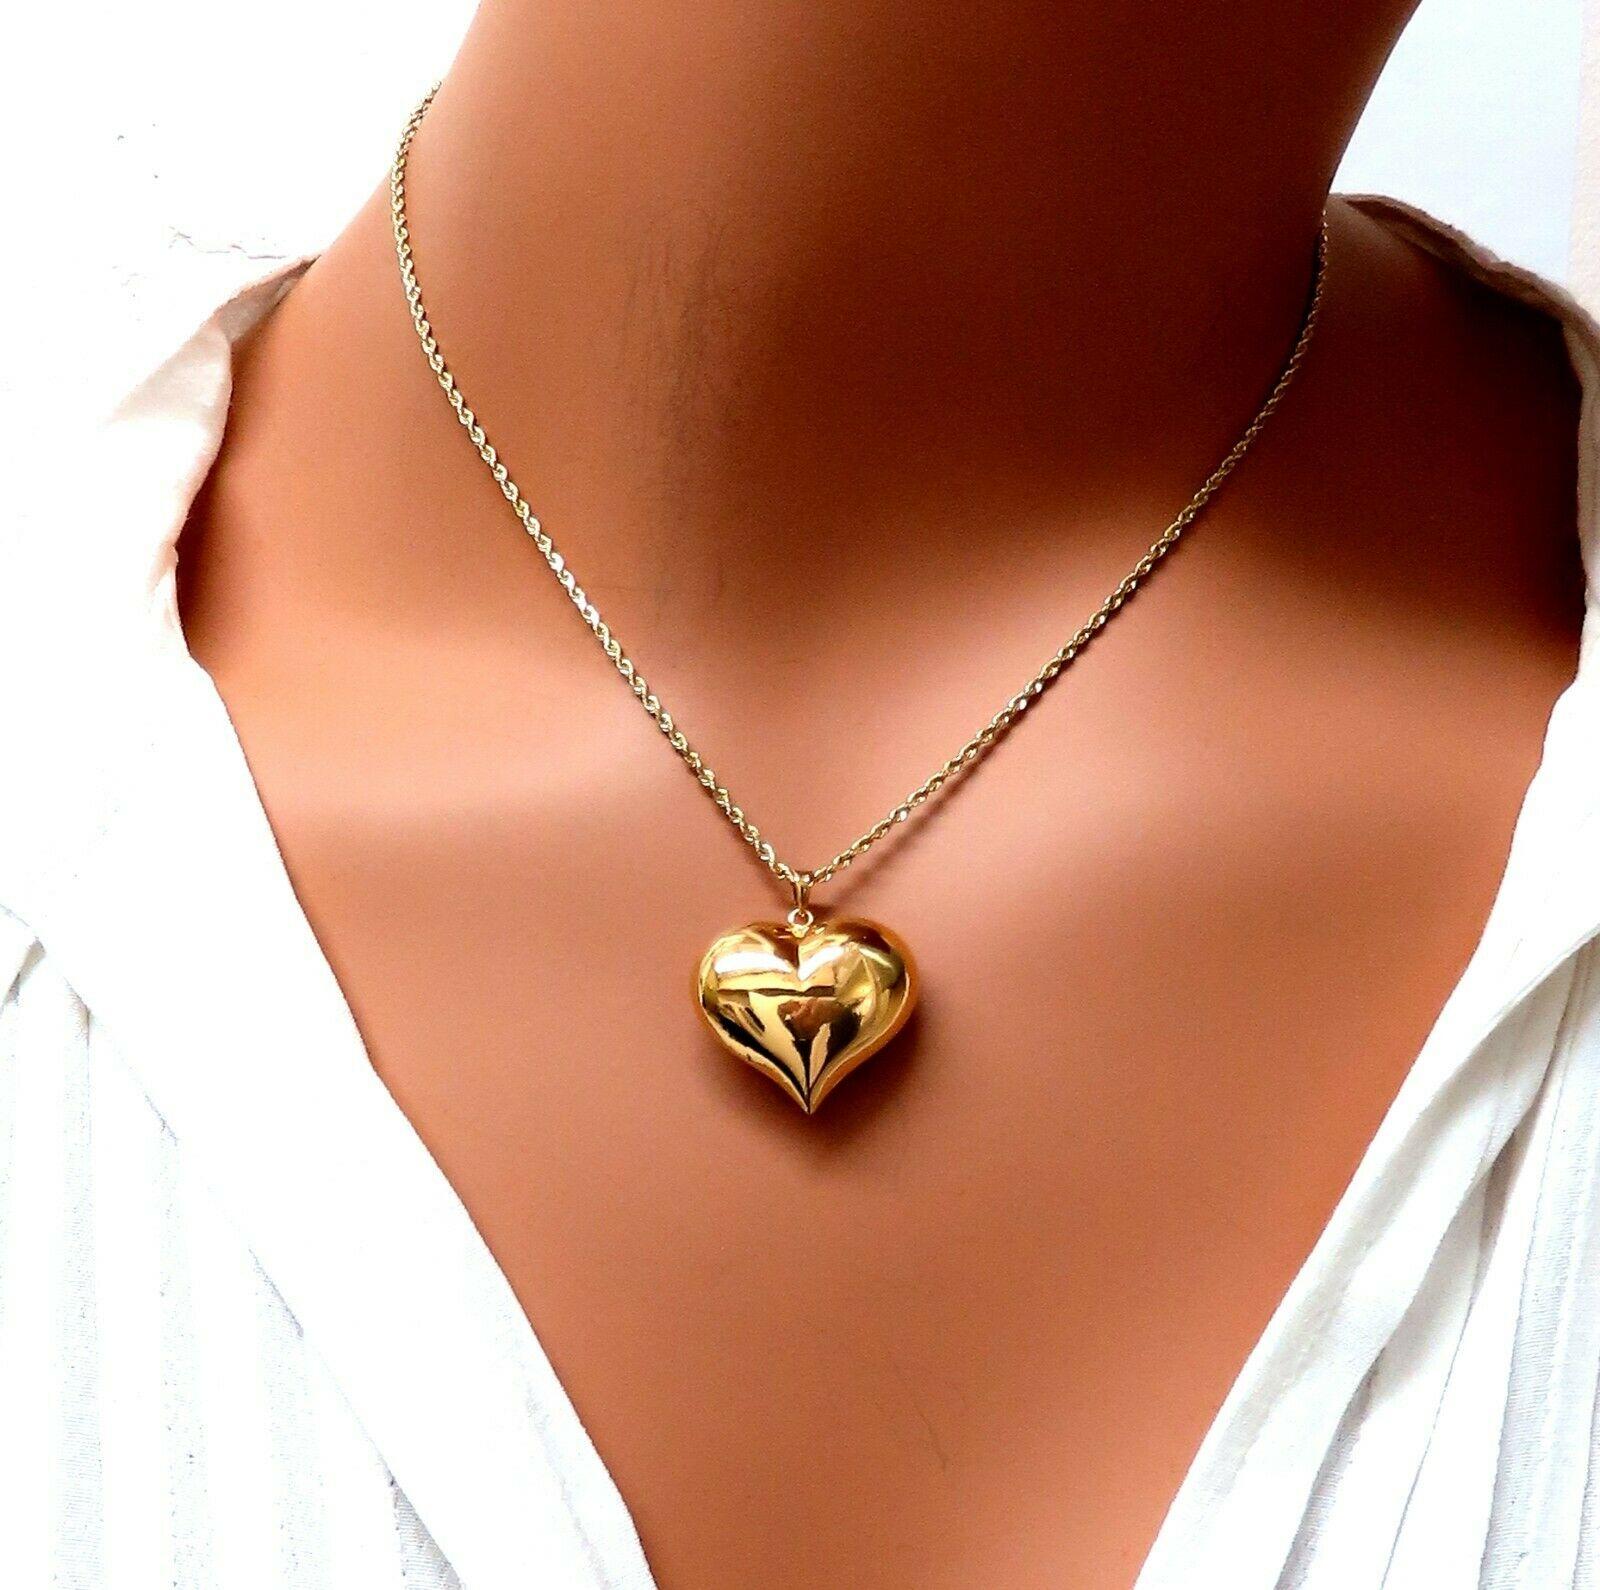 14 karat gold heart pendant